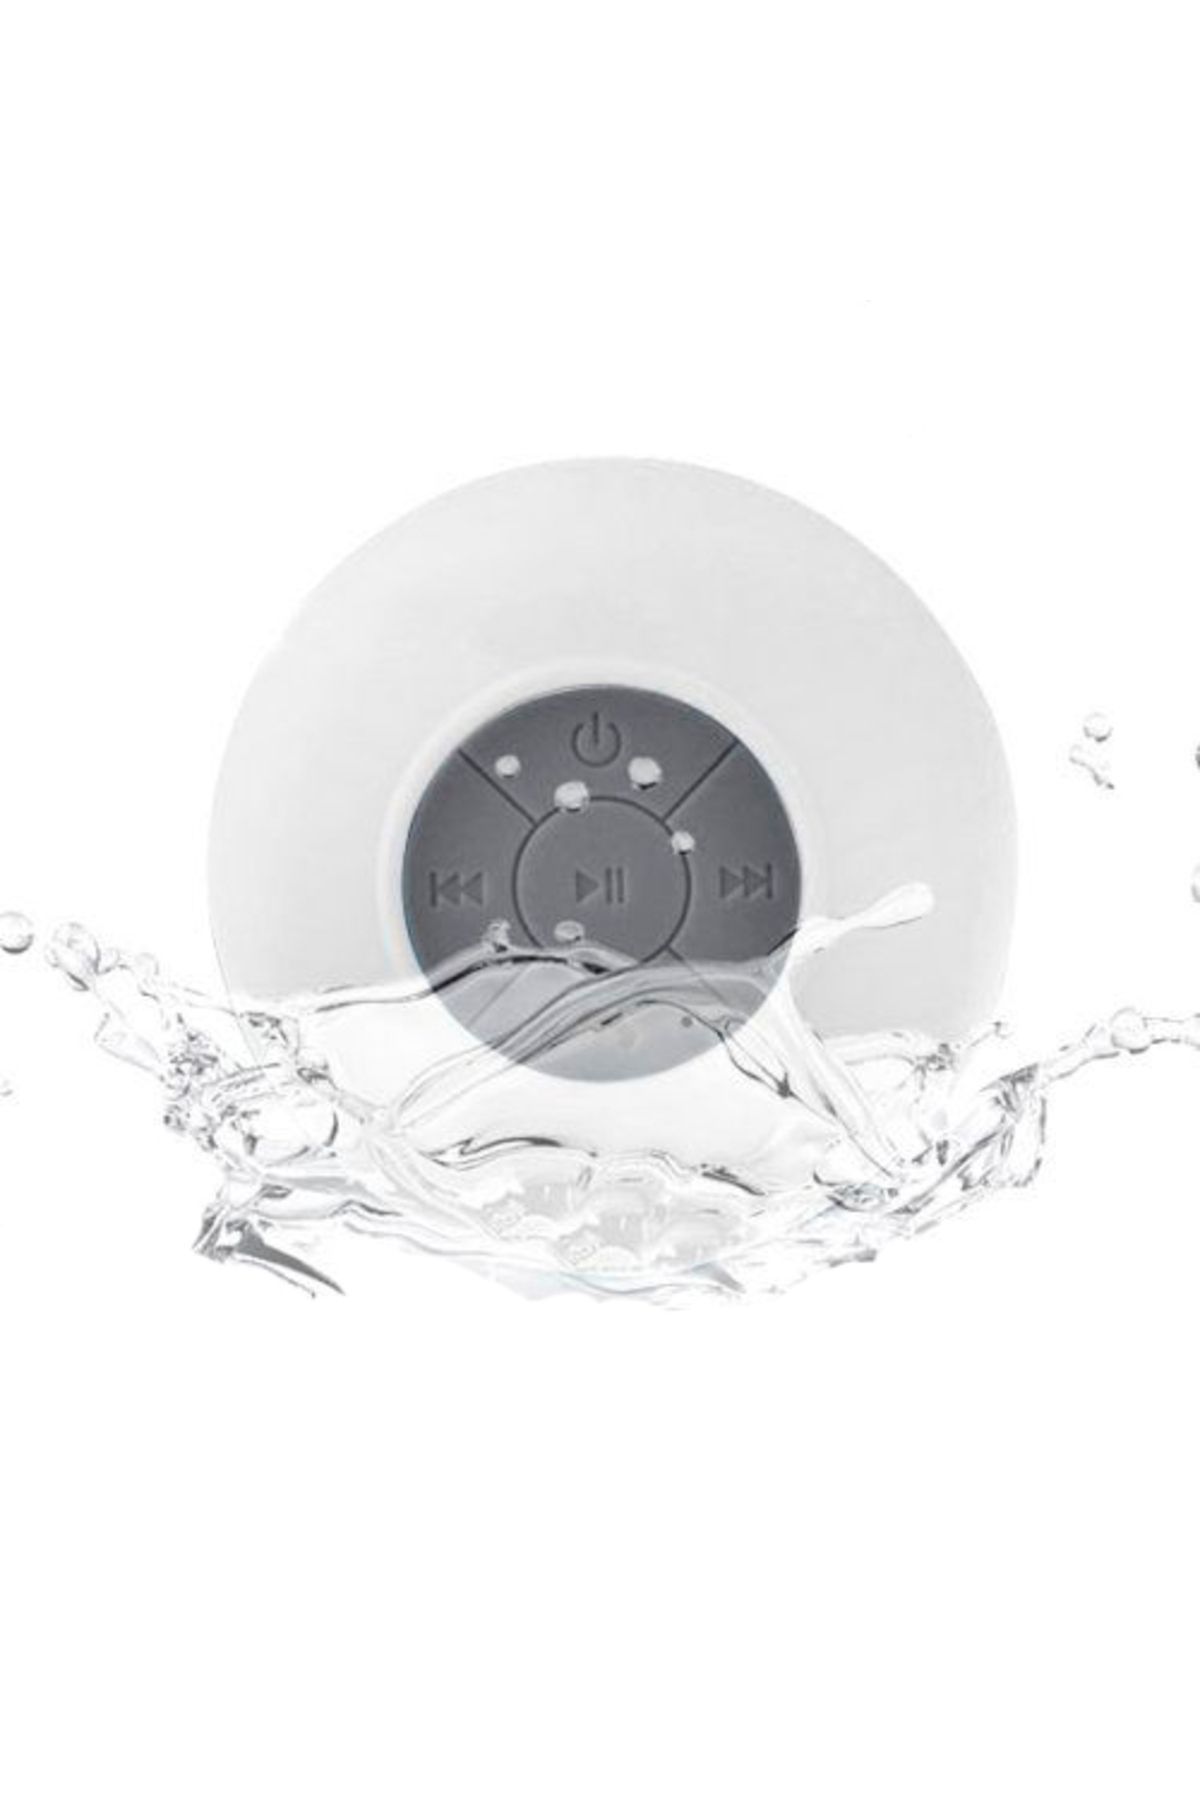 Diwu Su Geçirmez Mini Bluetooth Duş Hoparlörü (BEYAZ)